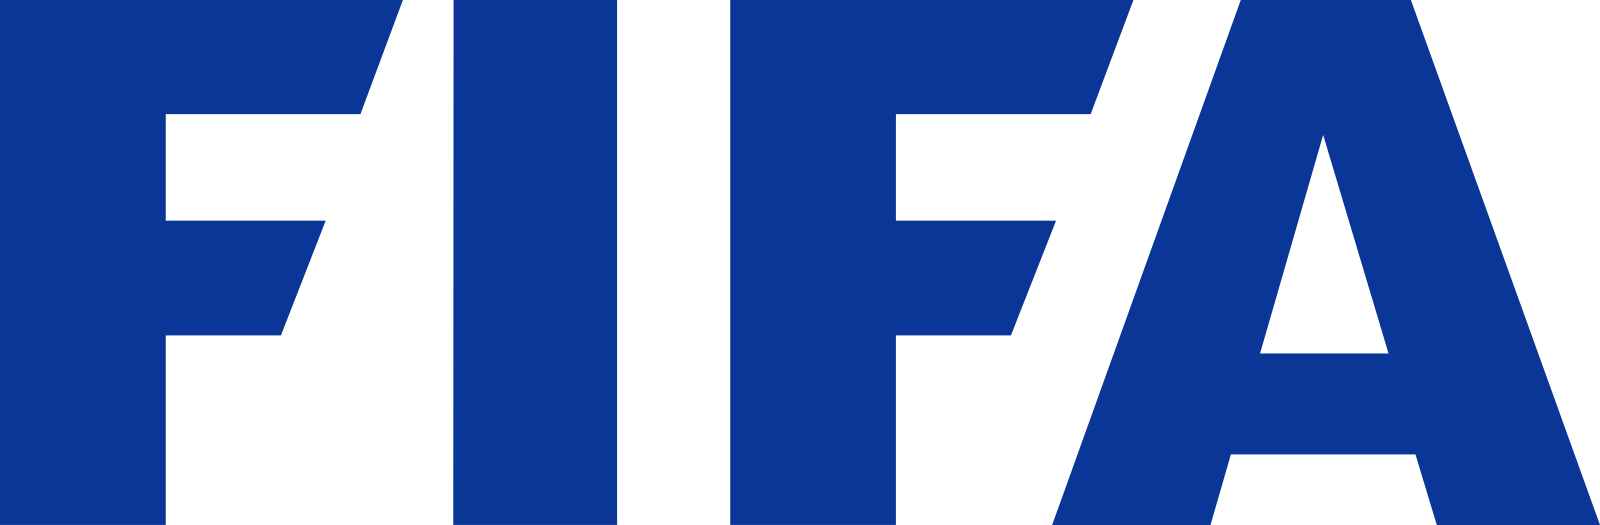 Fifa Logo Png Transparent Fifa Logopng Images Pluspng Images